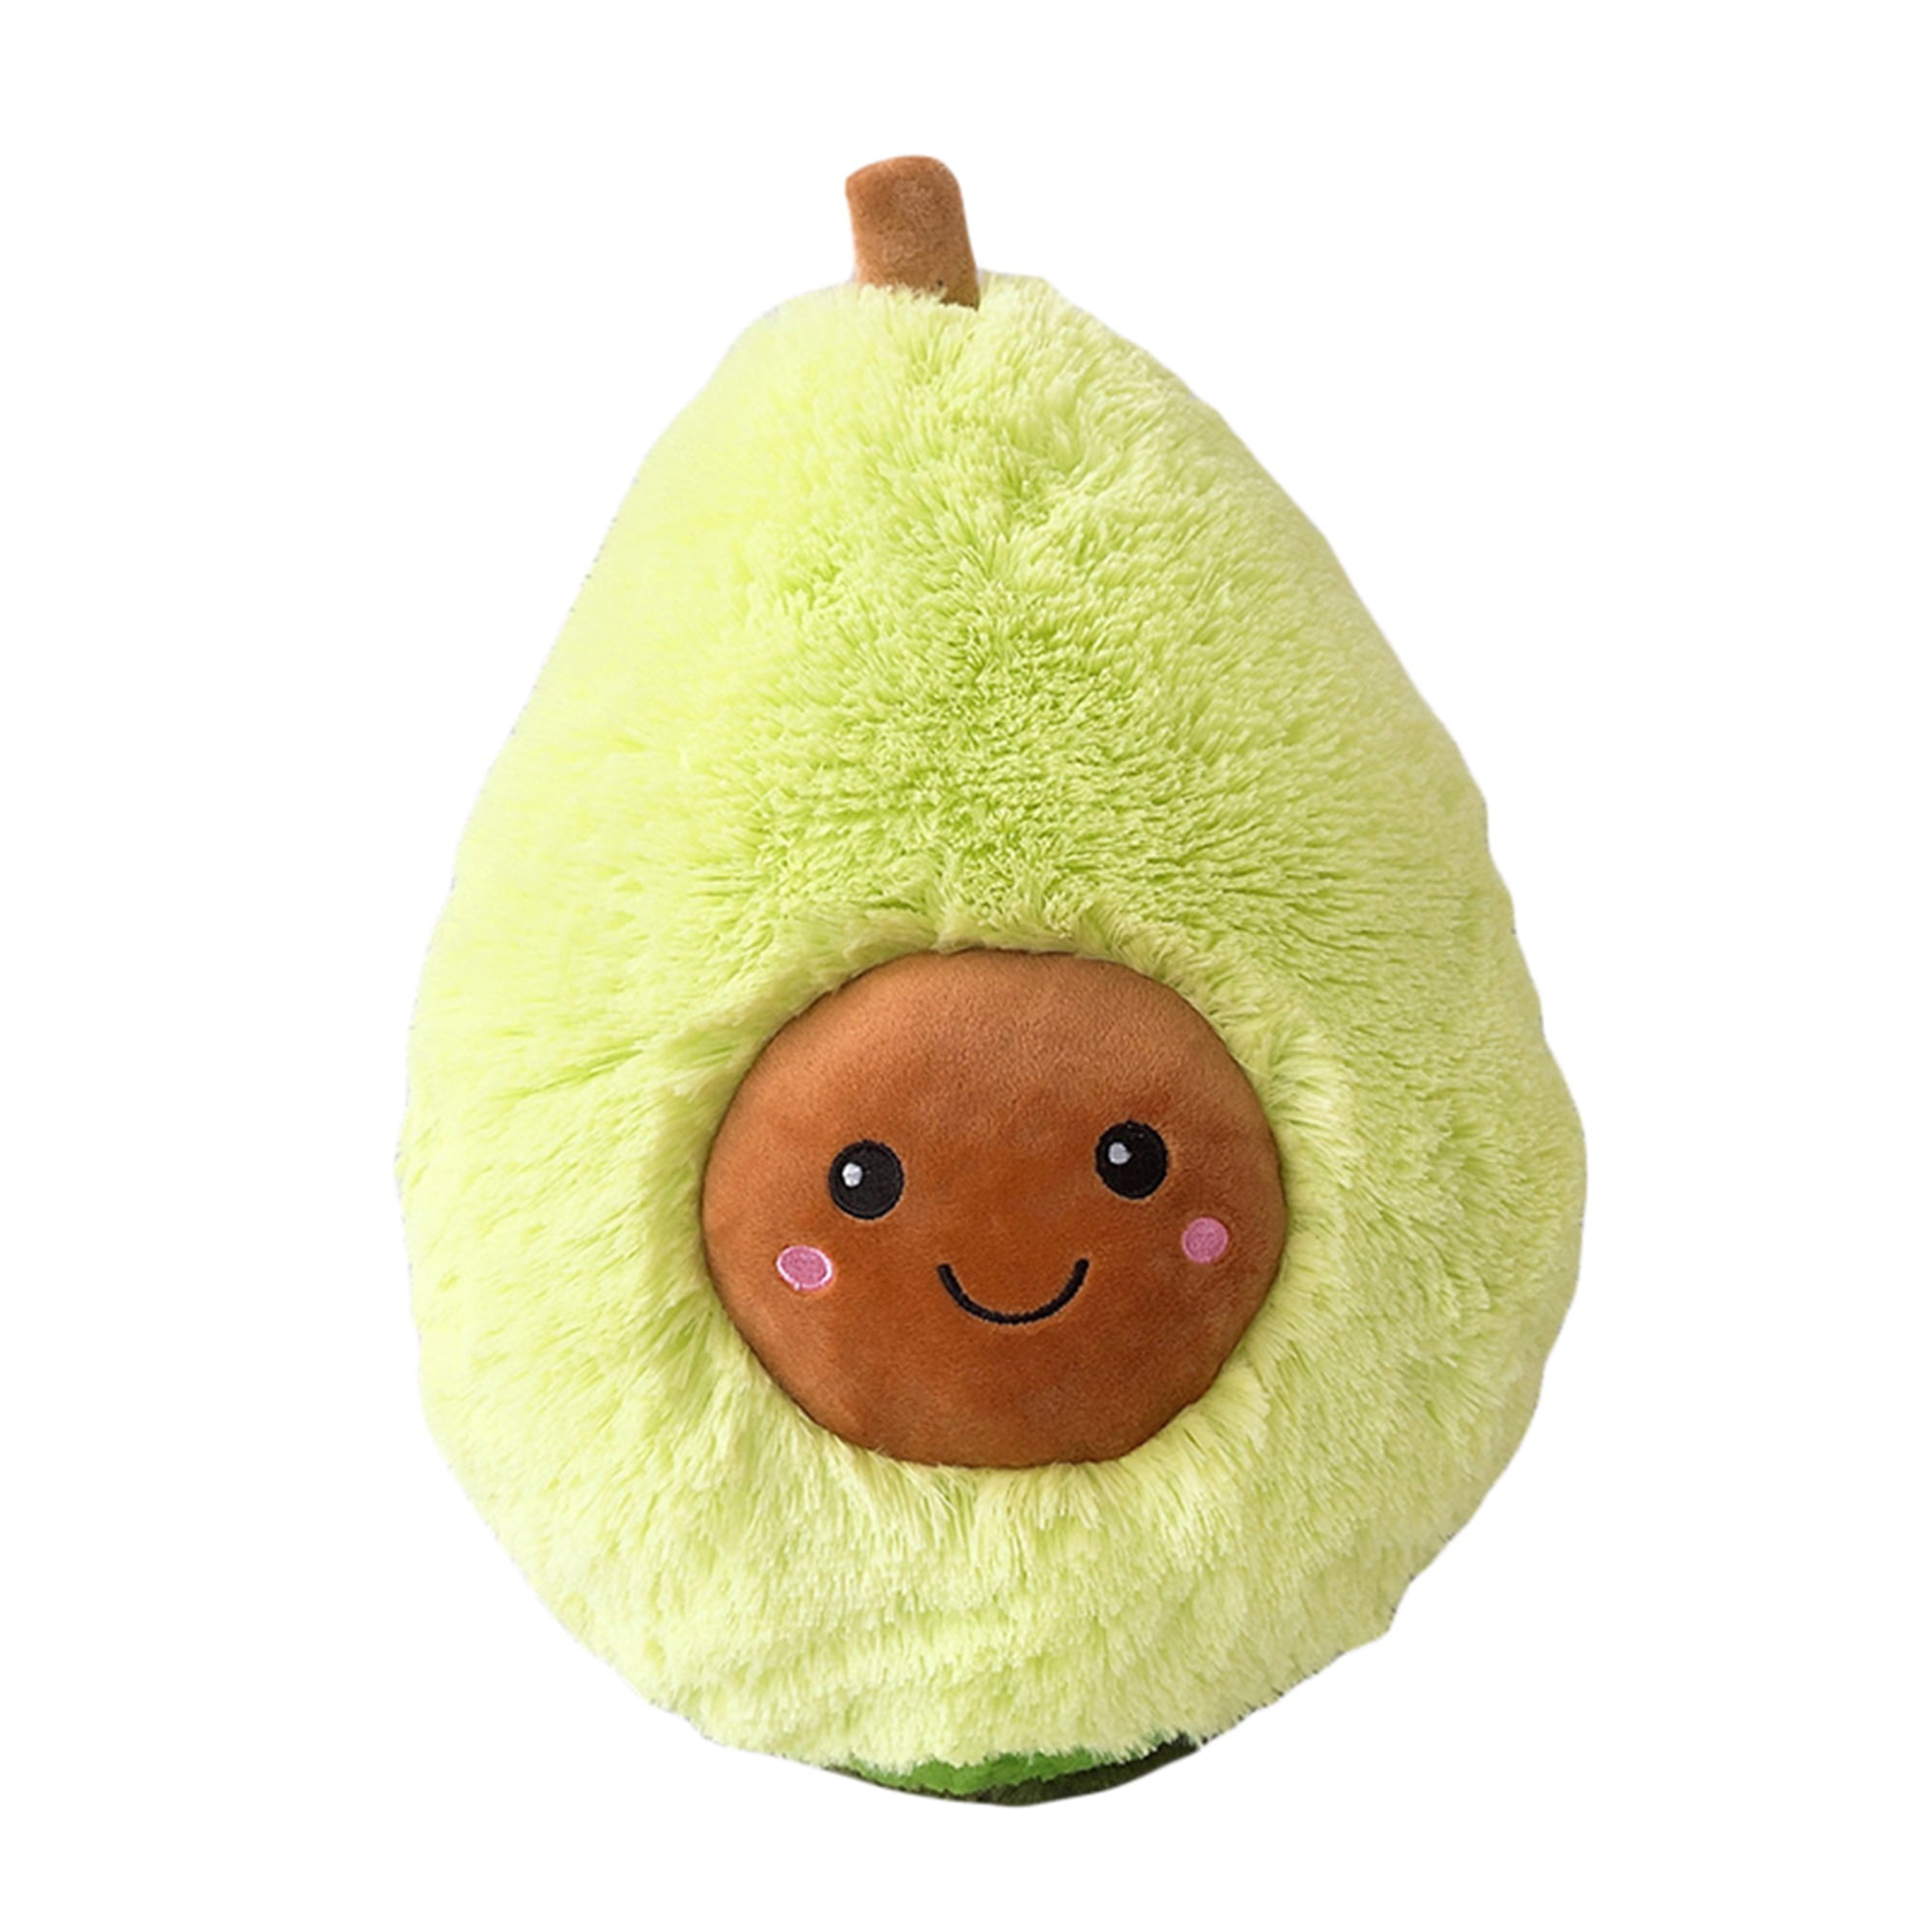 Cute Smiling Avocado Stuffed Plush Toy Super Soft Cushion Pillow Child Gift NEW 